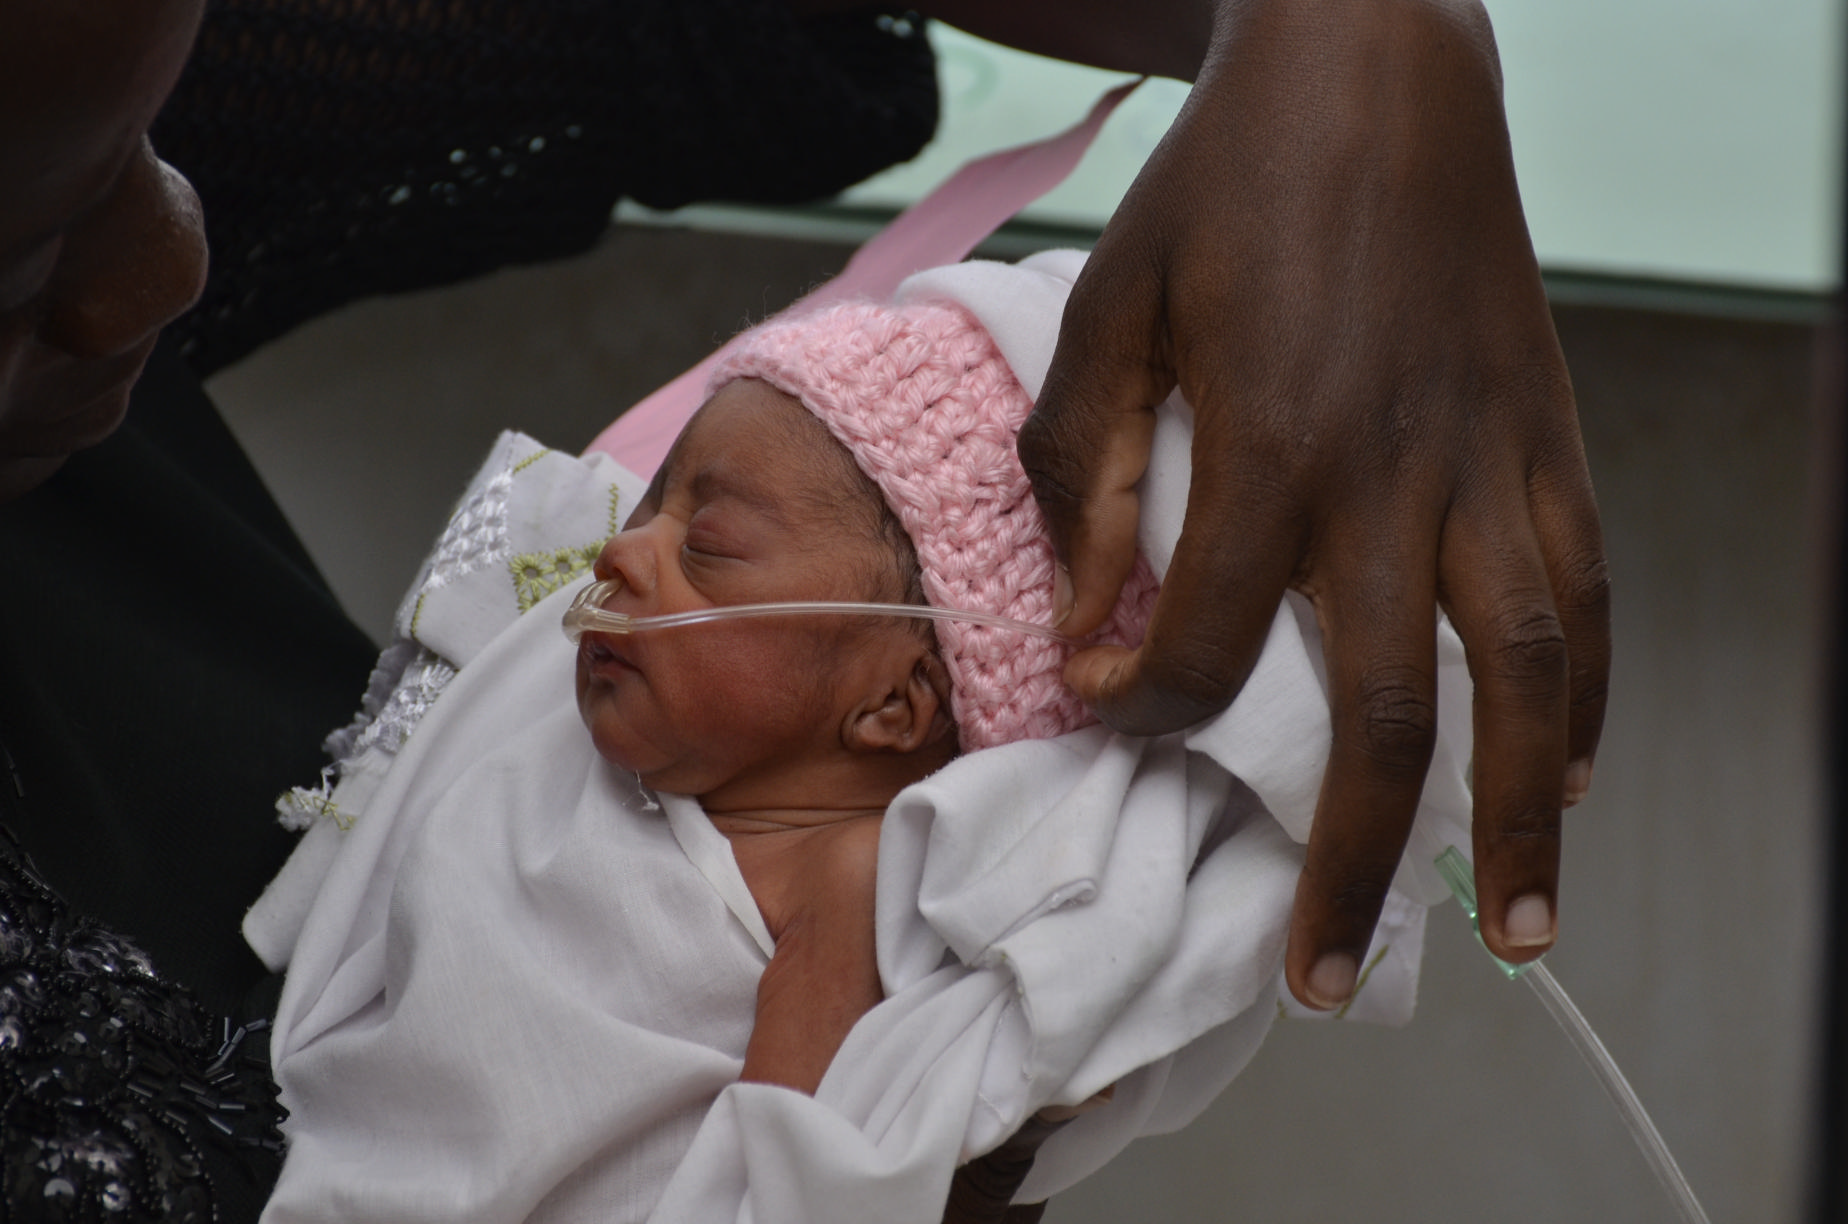 “Information deficit causing increase in neonatal deaths”